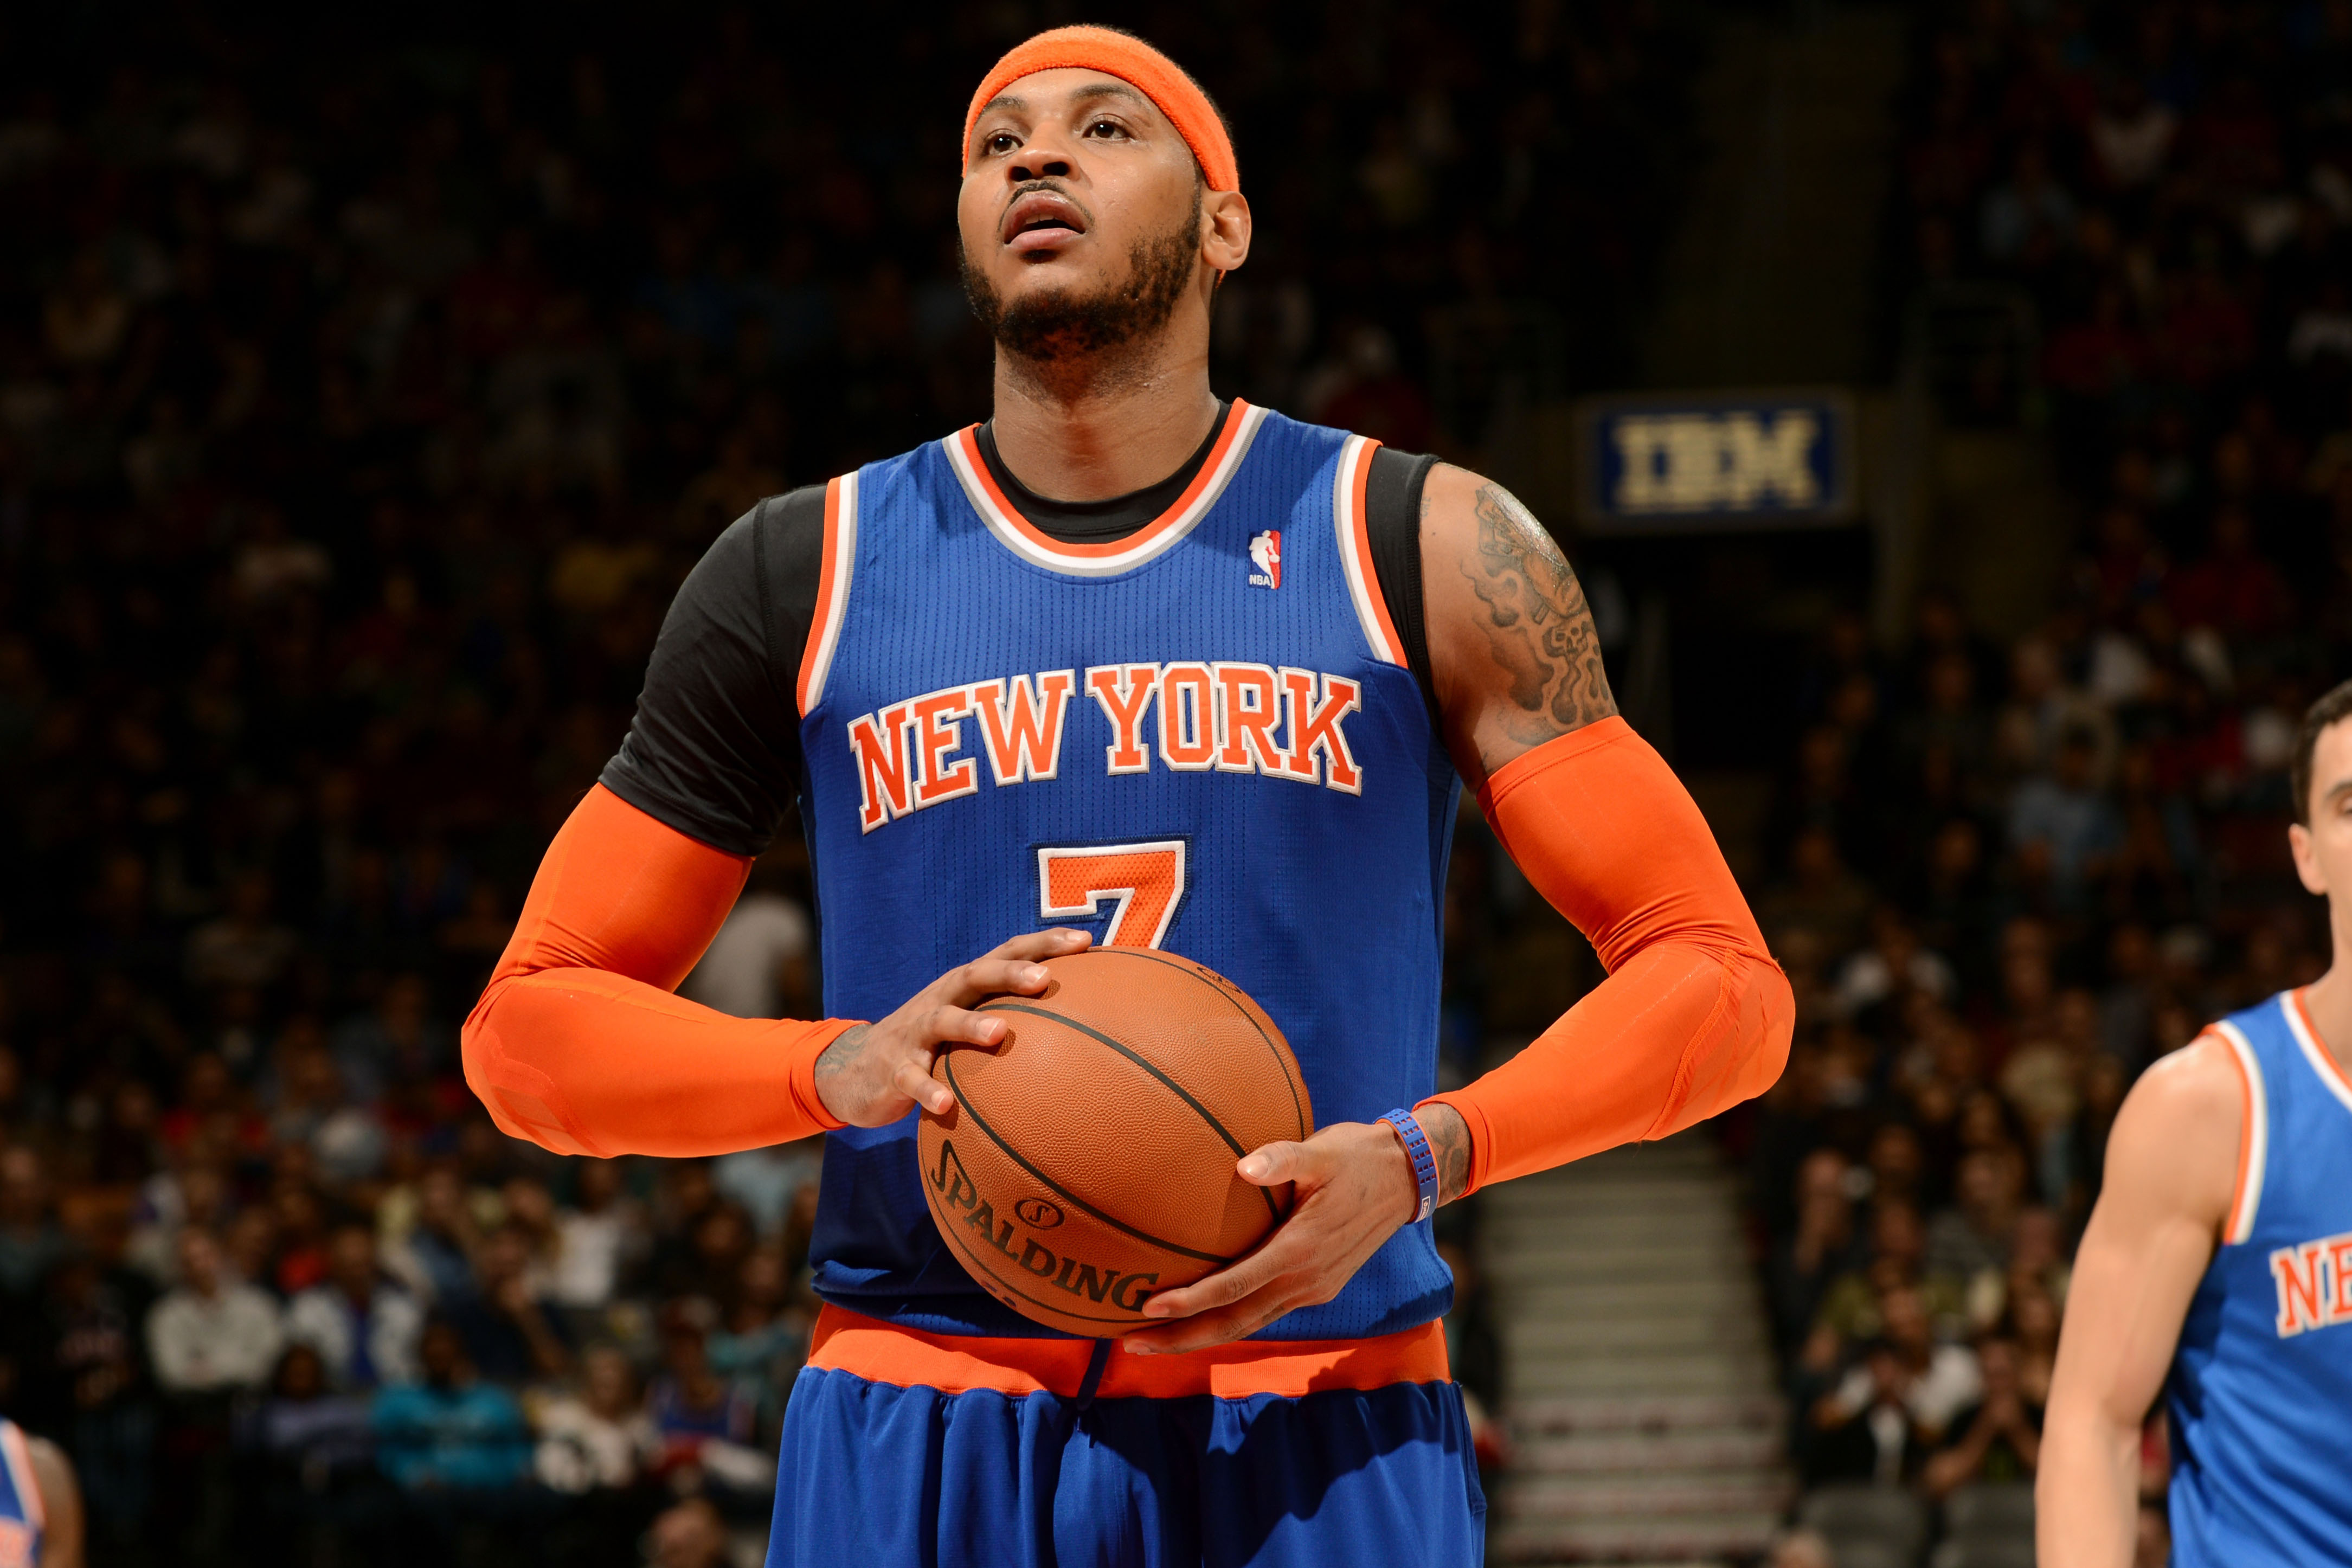 New York Knicks forward Carmelo Anthony (L) talks with center